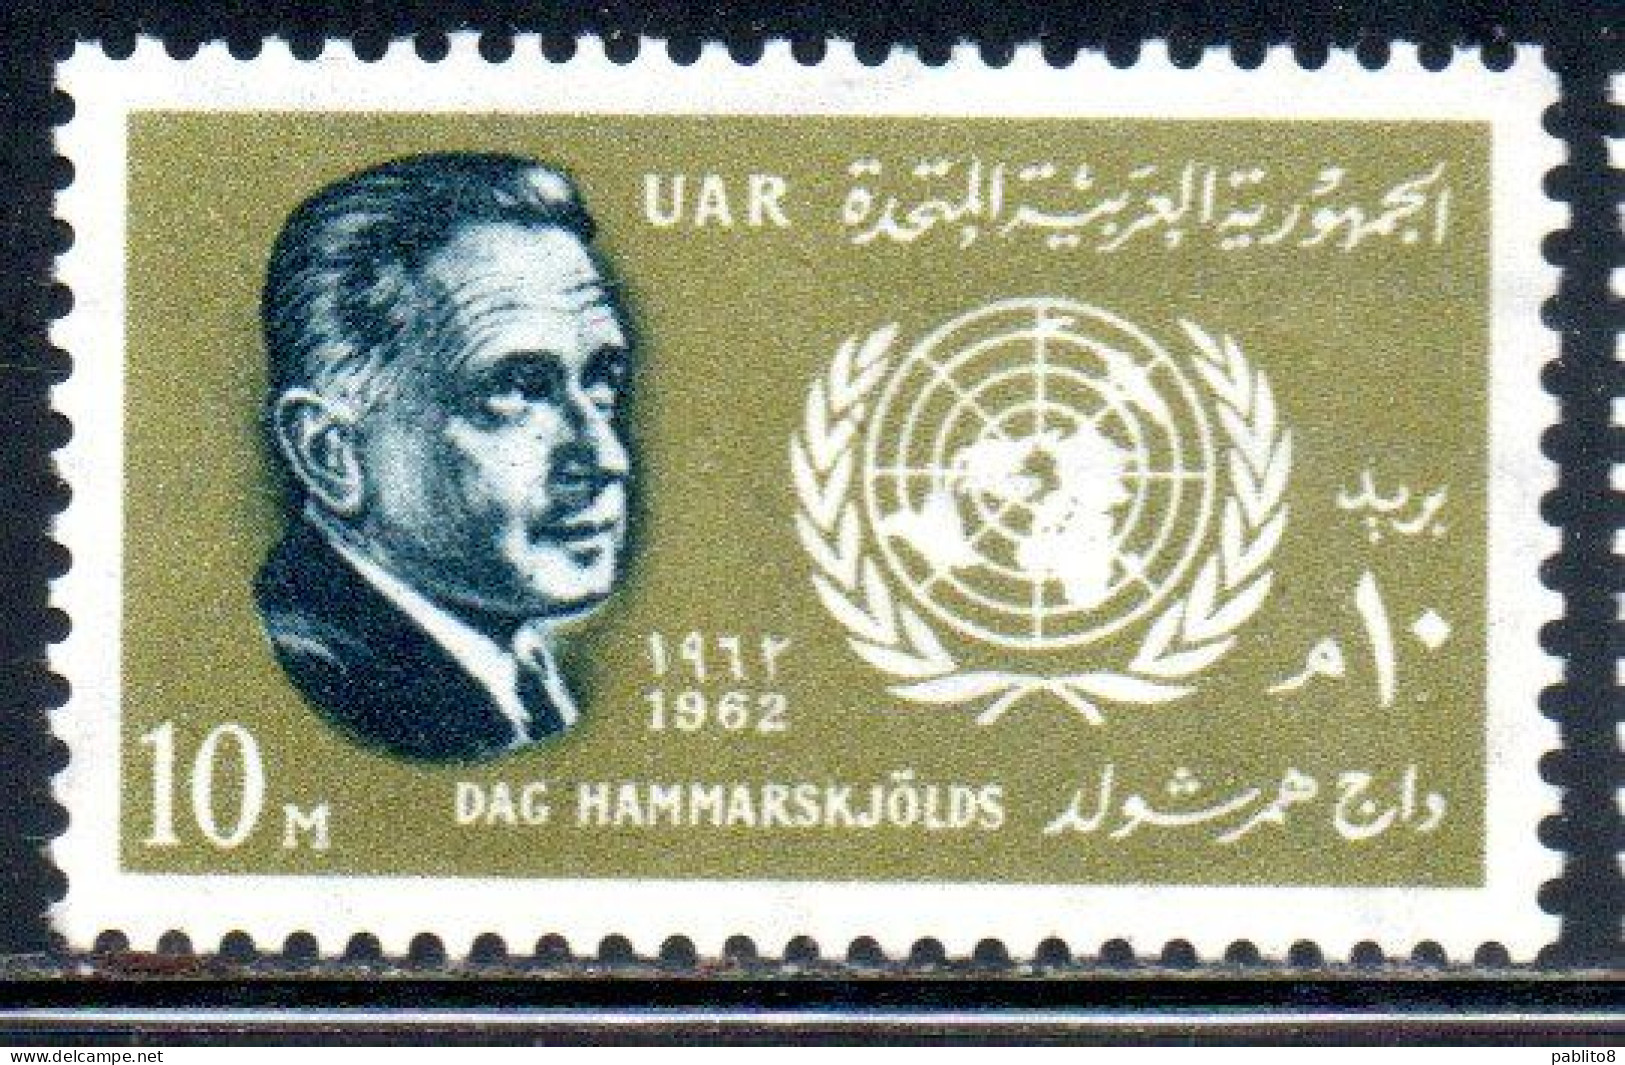 UAR EGYPT EGITTO 1962 DAG HAMMARSKJOLD SECRETARY GENERAL OF THE UN ONU 10m MNH - Neufs